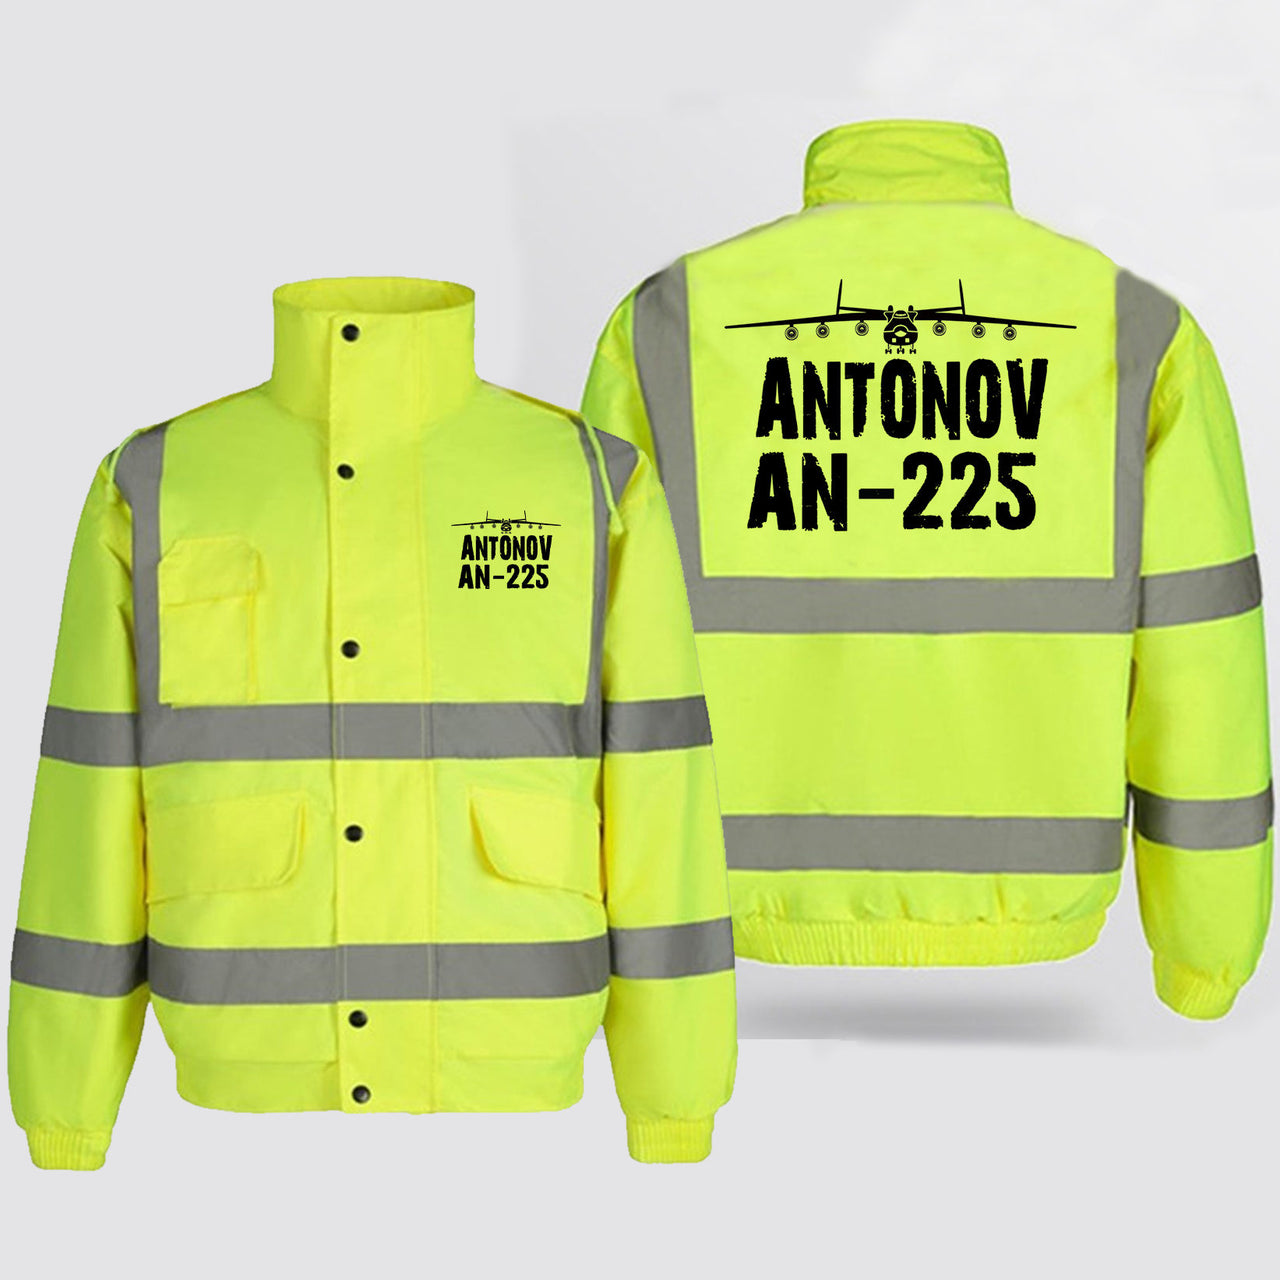 Antonov AN-225 & Plane Designed Reflective Winter Jackets